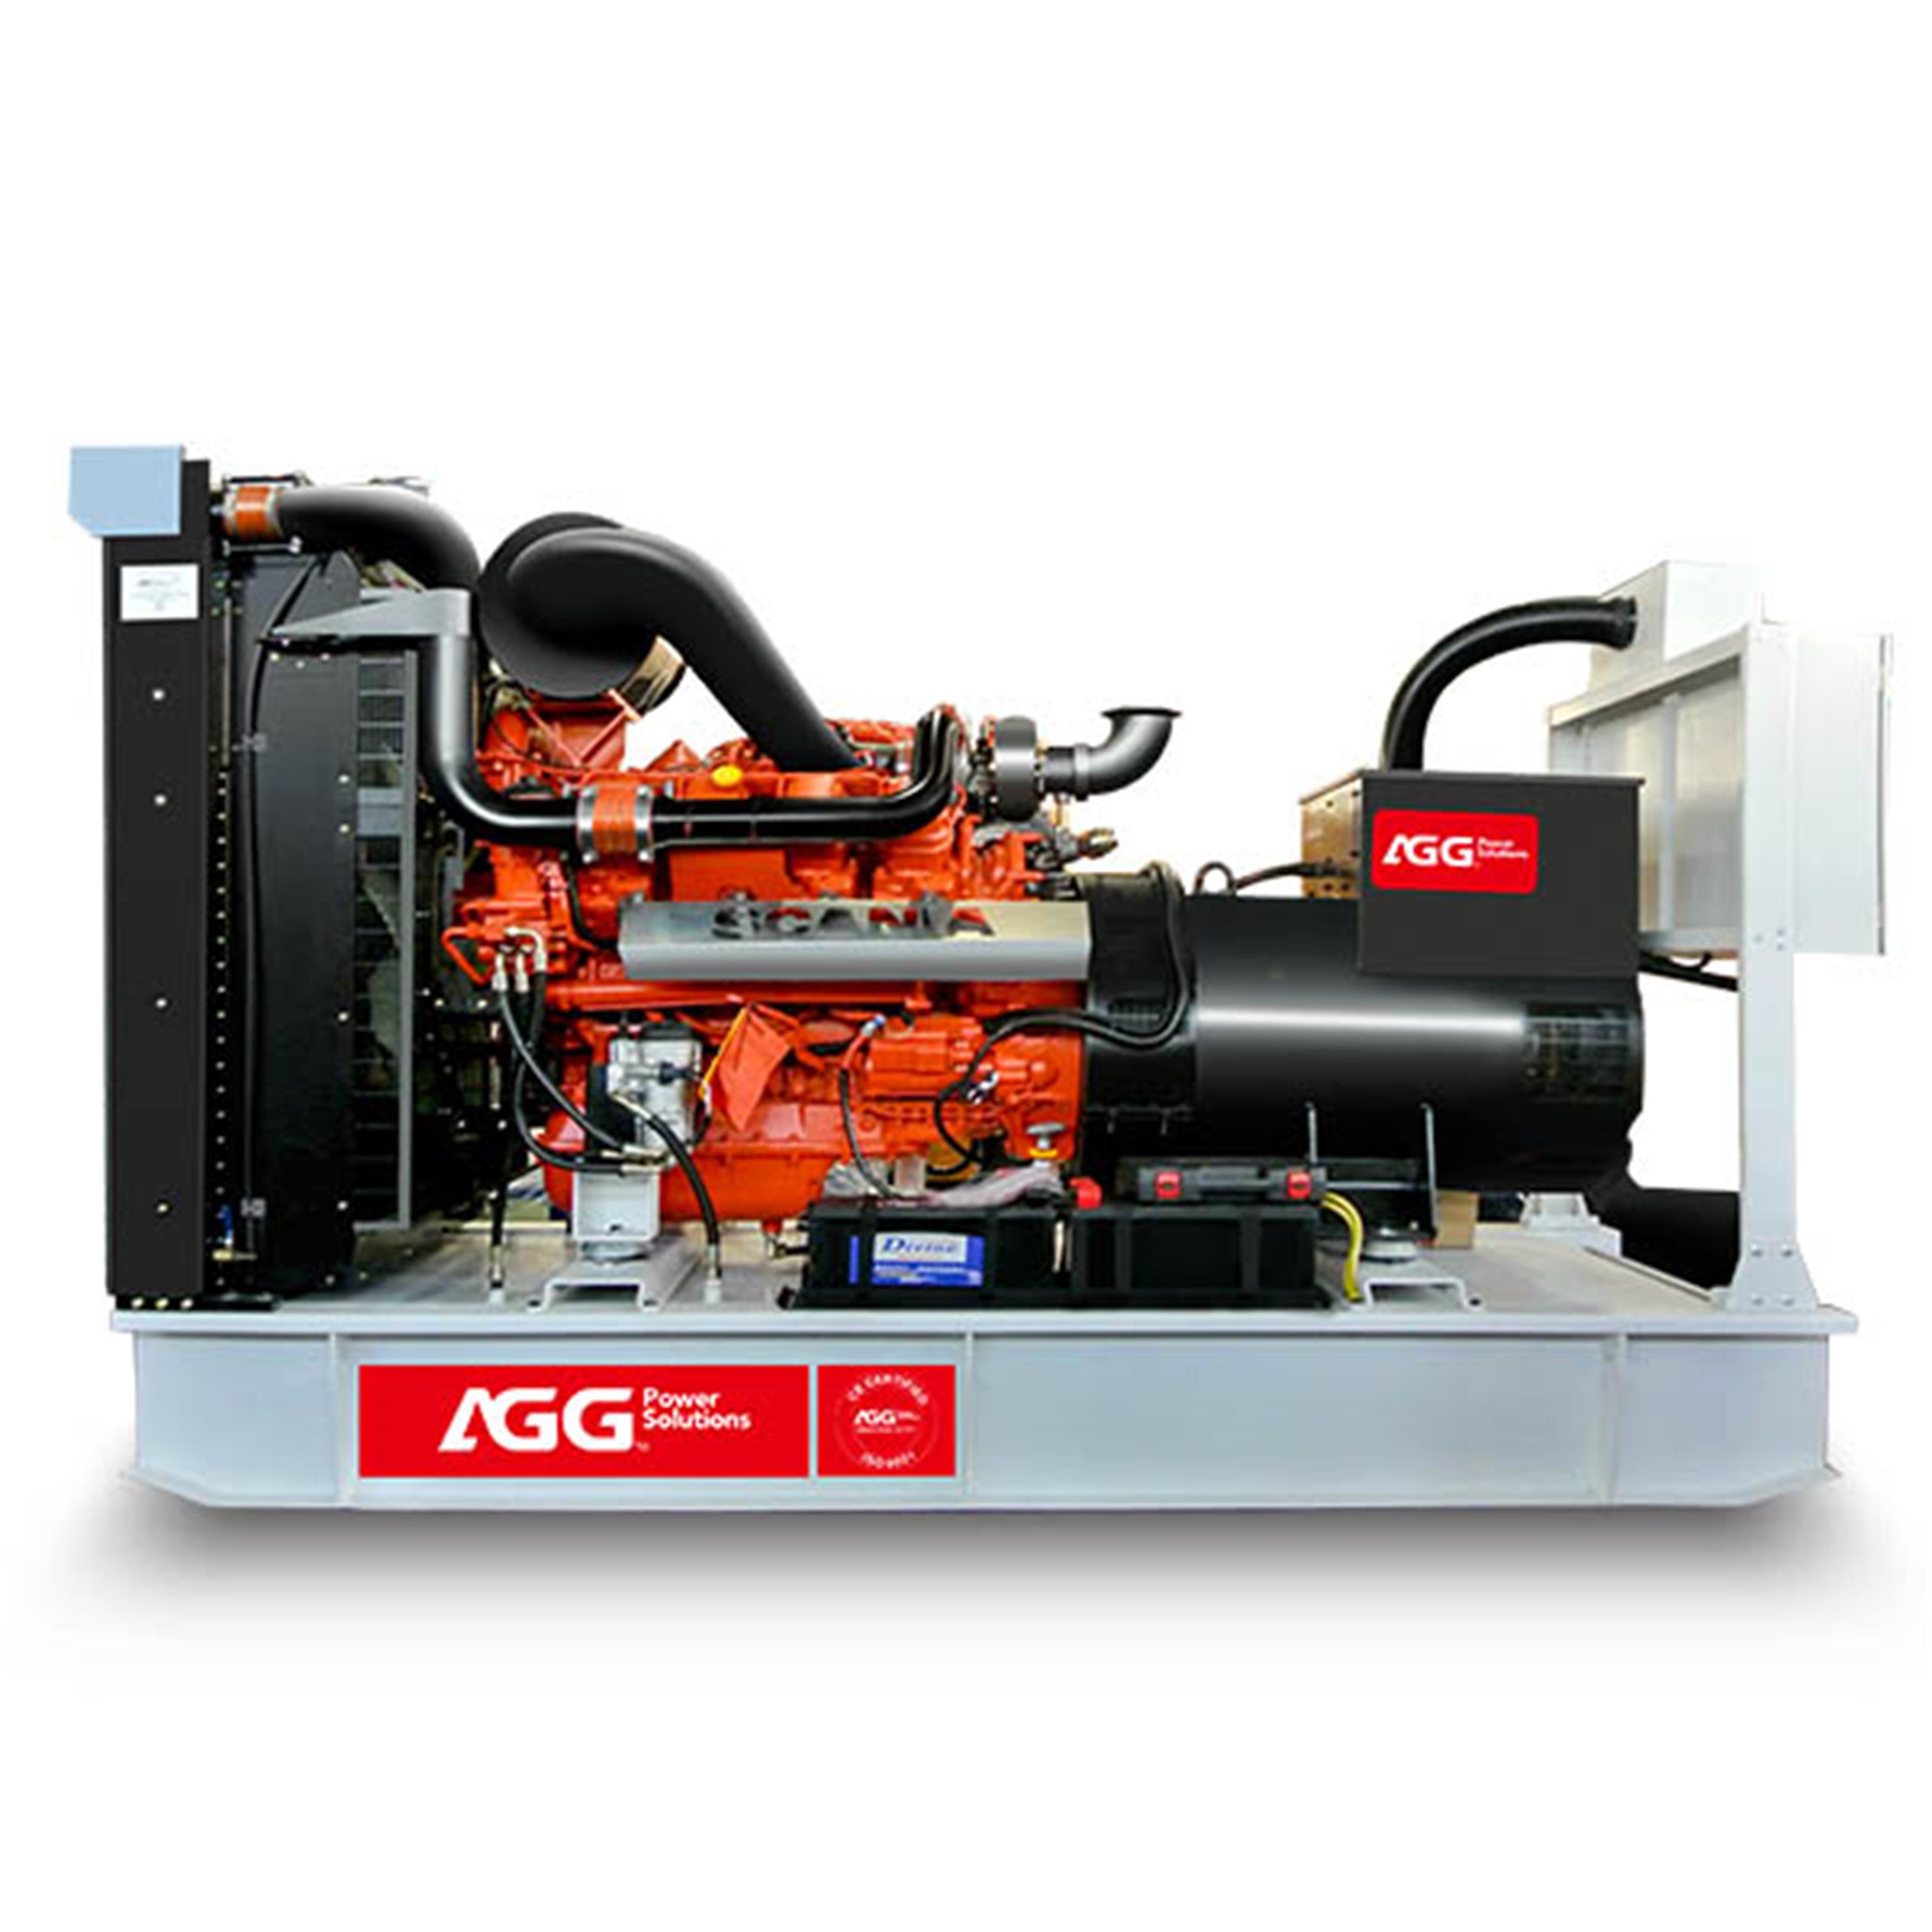 S550E5-50HZ - AGG Power Technology (UK) CO., LTD.